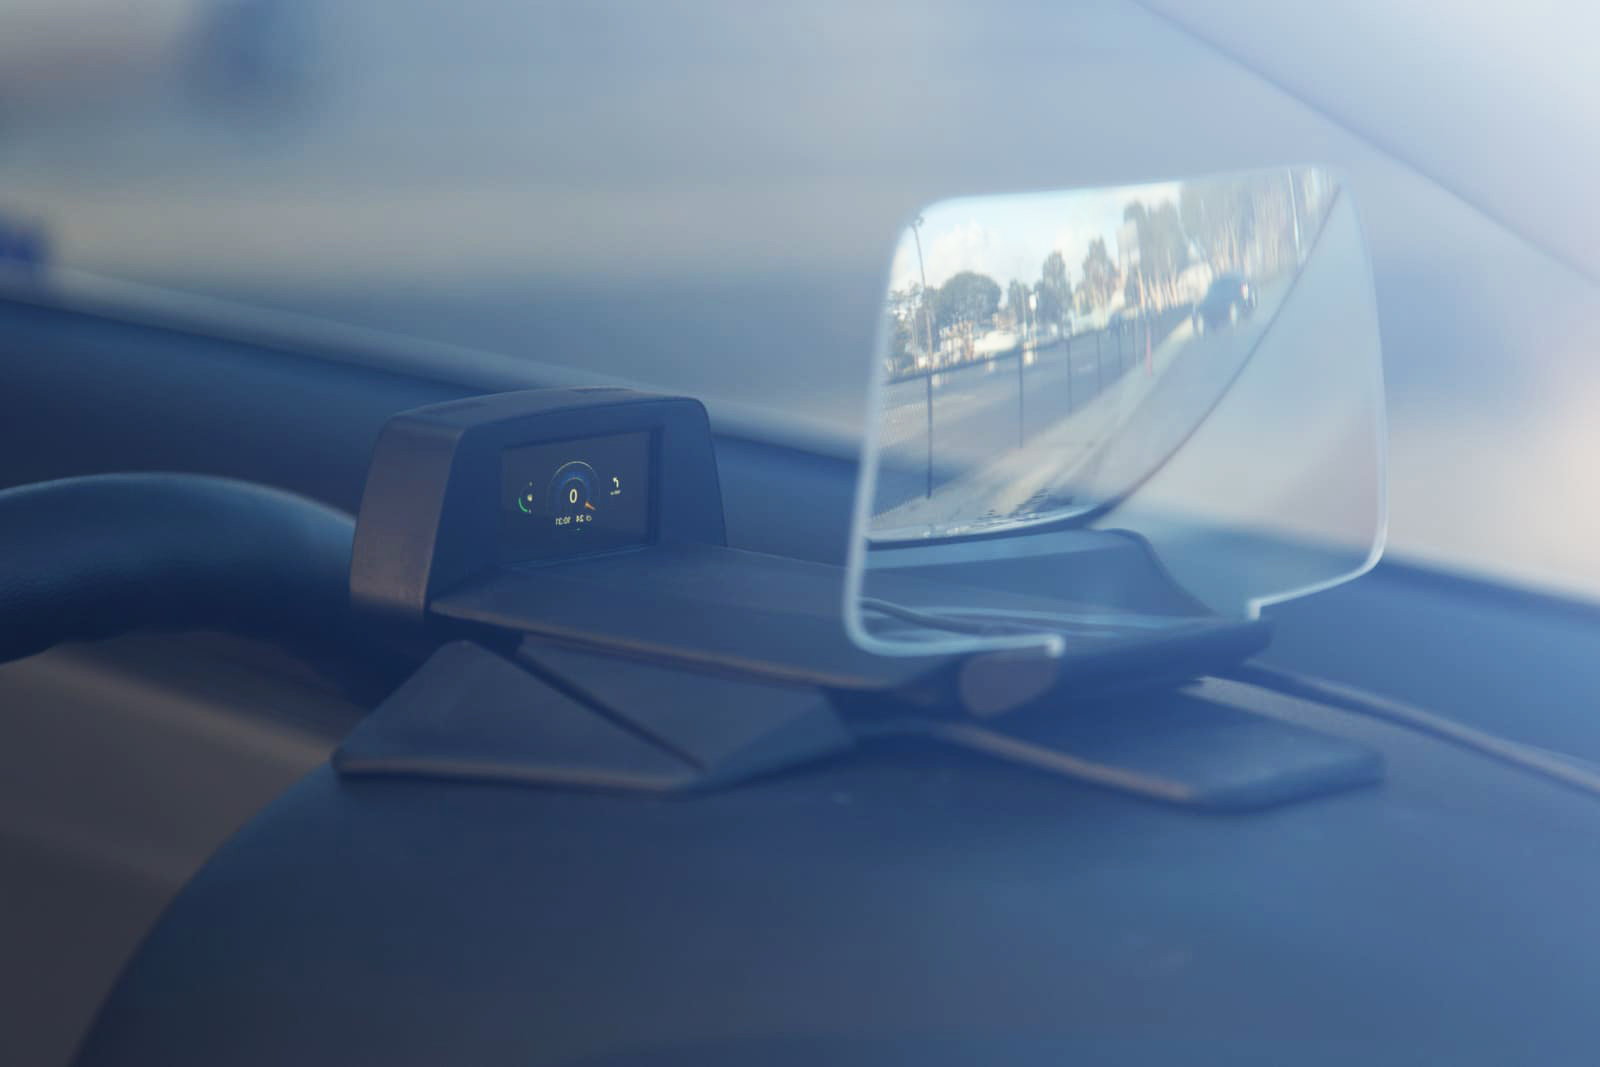 Digital Rectangular Speegital Car Head Up Display Car HUD, Cars at